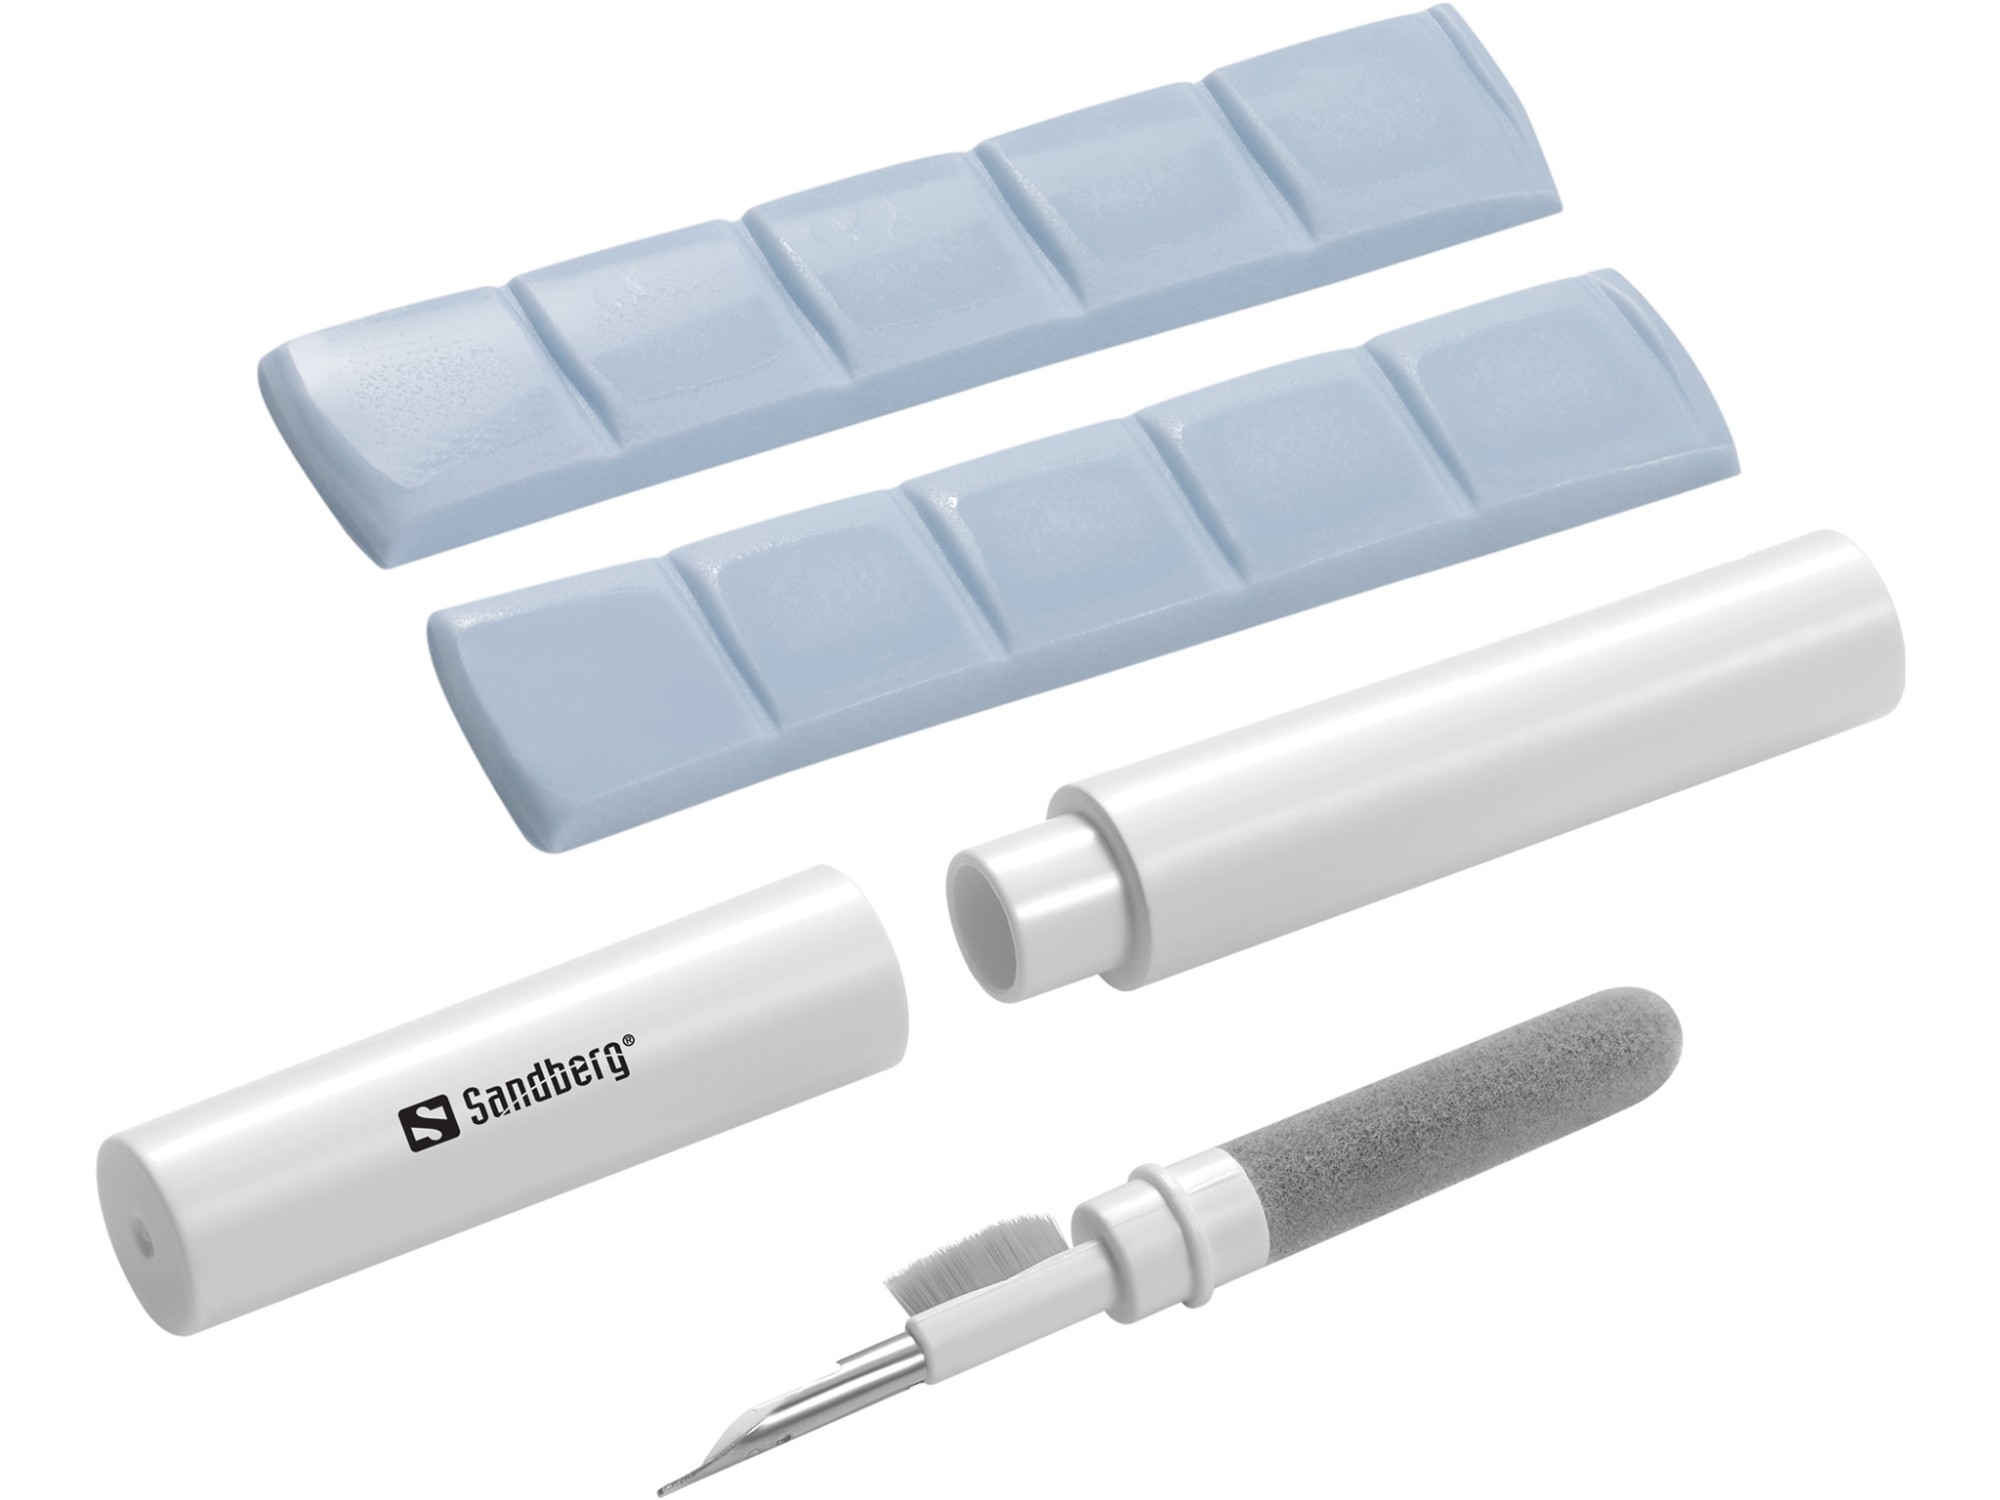 470-32 SANDBERG Cleaning Pen Kit for Airpods